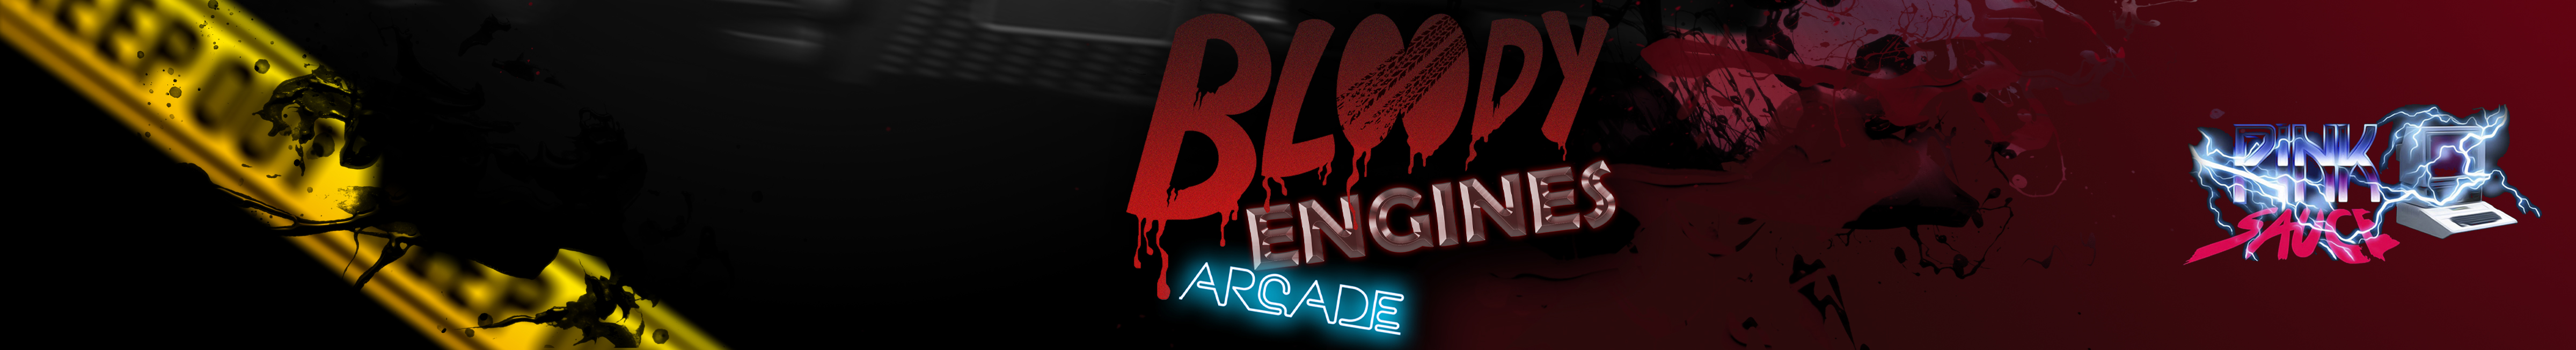 Bloody Engines Arcade